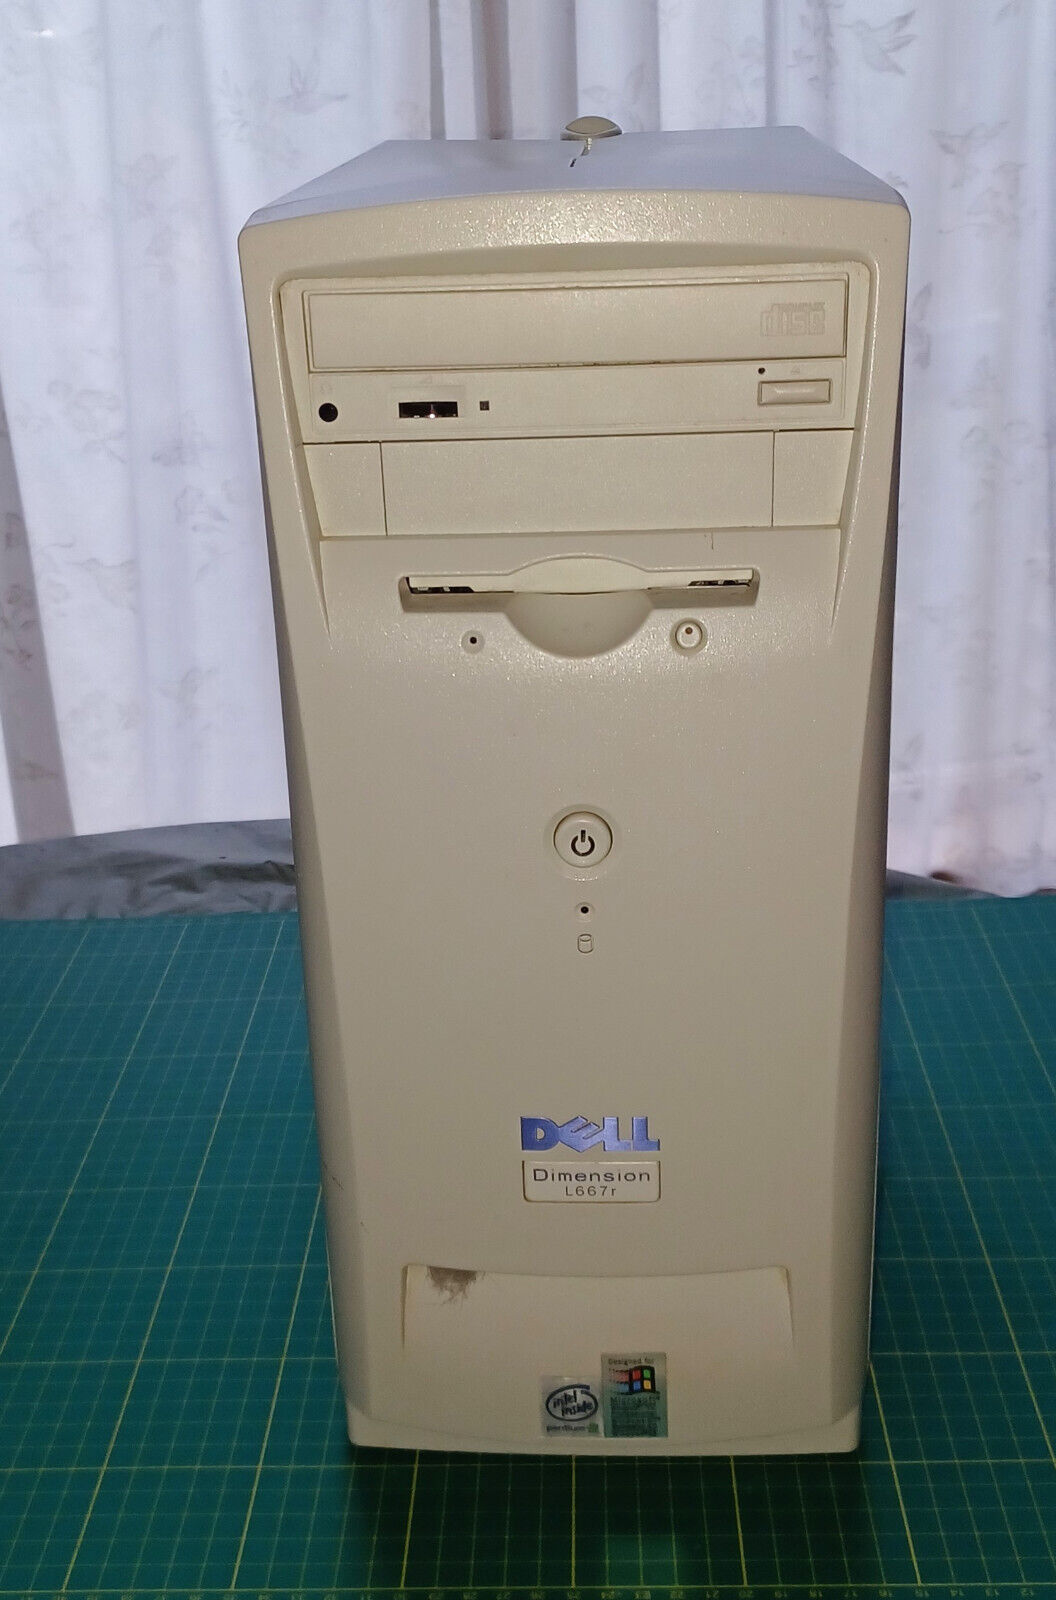 Vintage Dell Dimension Desktop Computer L667r Pentium III Works No HDD No OS